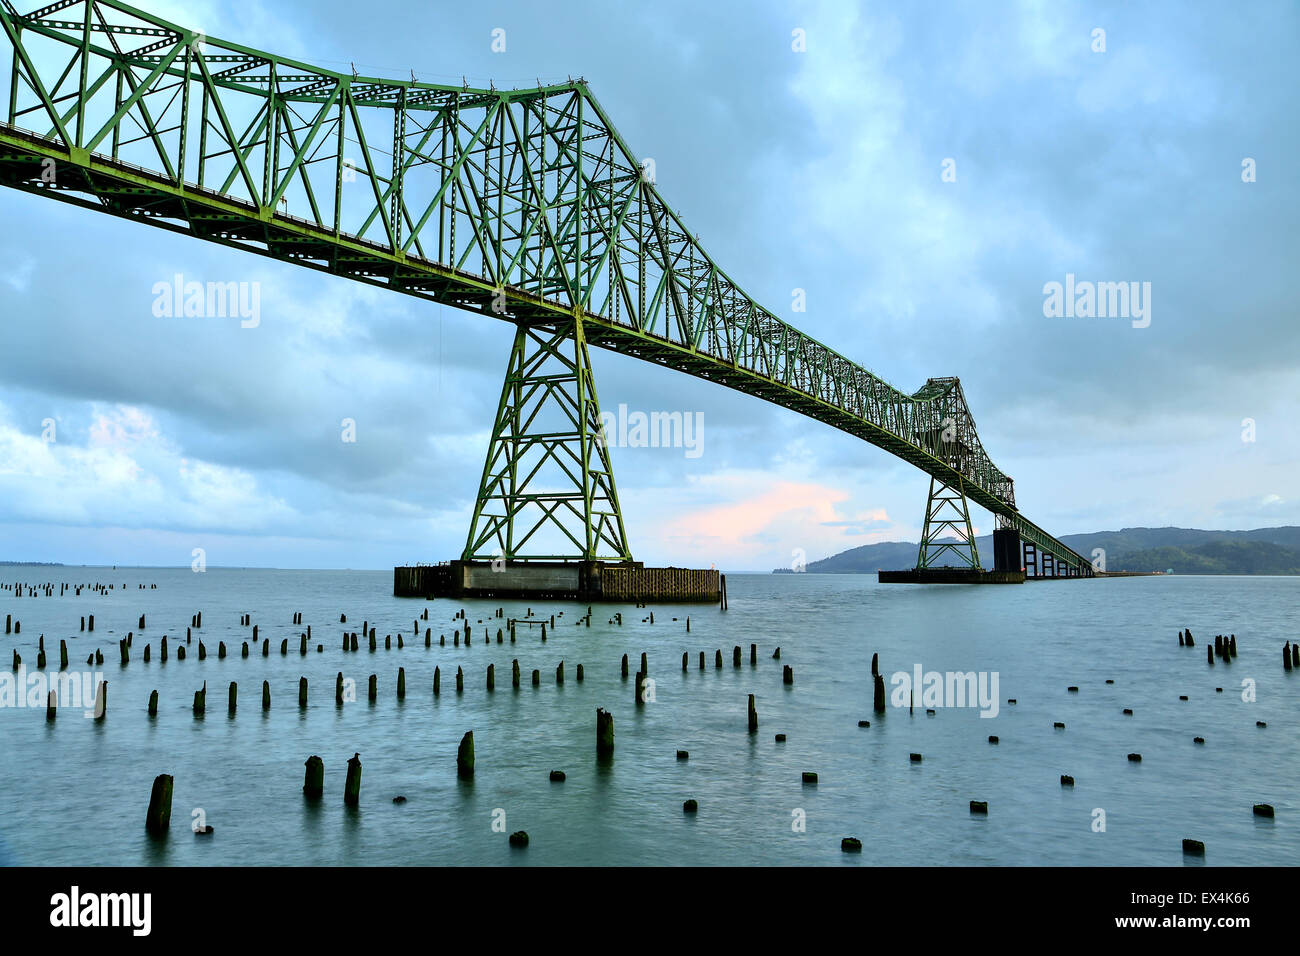 Astoria-Megler Bridge, Columbia River and wood pylons, Astoria, Oregon USA Stock Photo